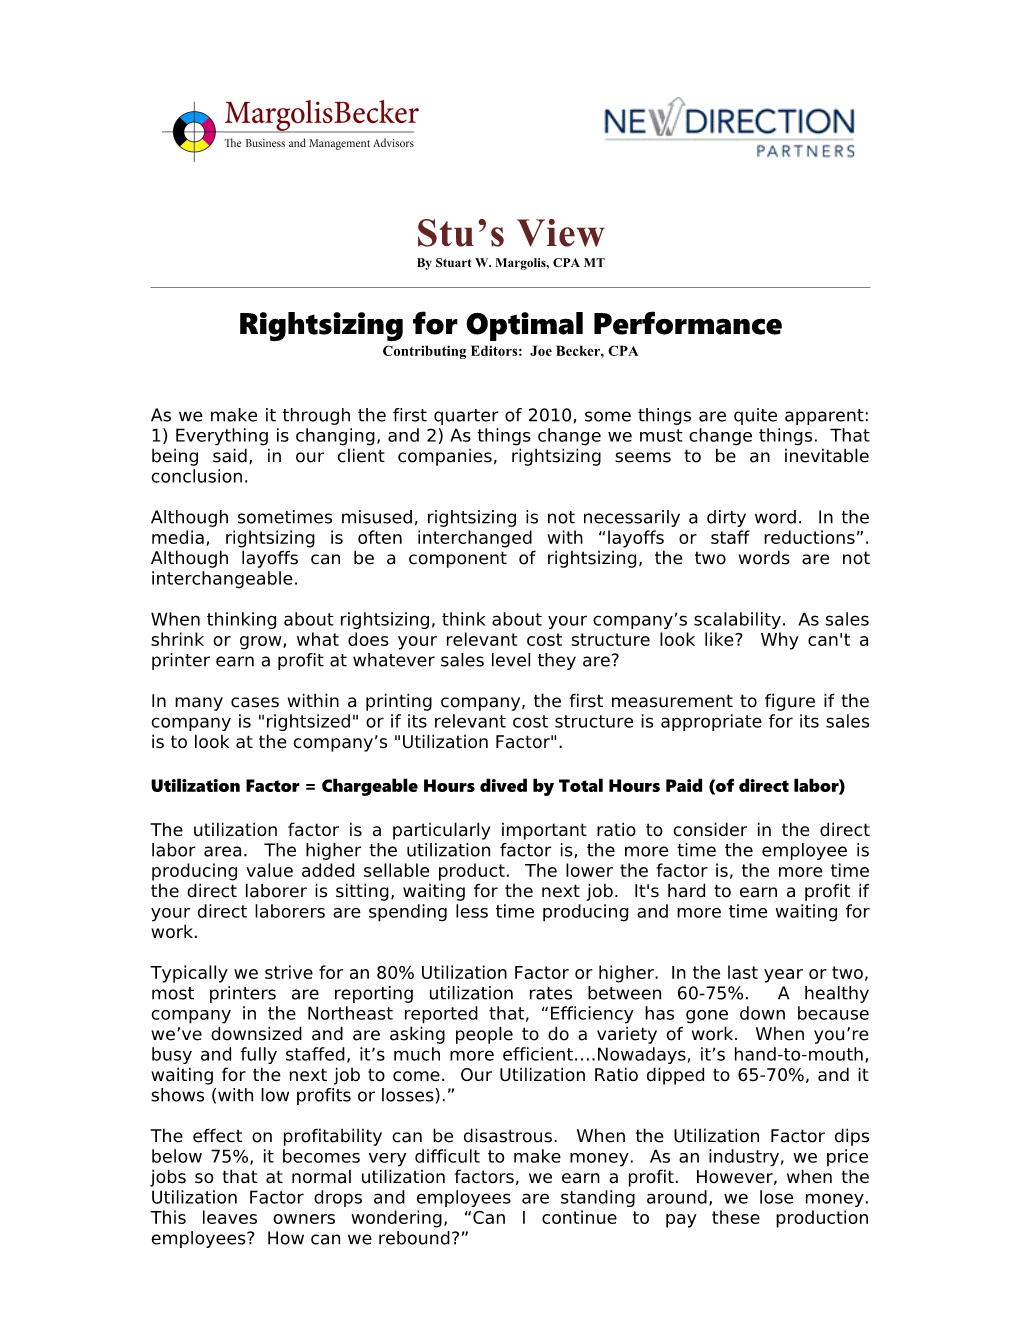 Rightsizing for Optimal Performance